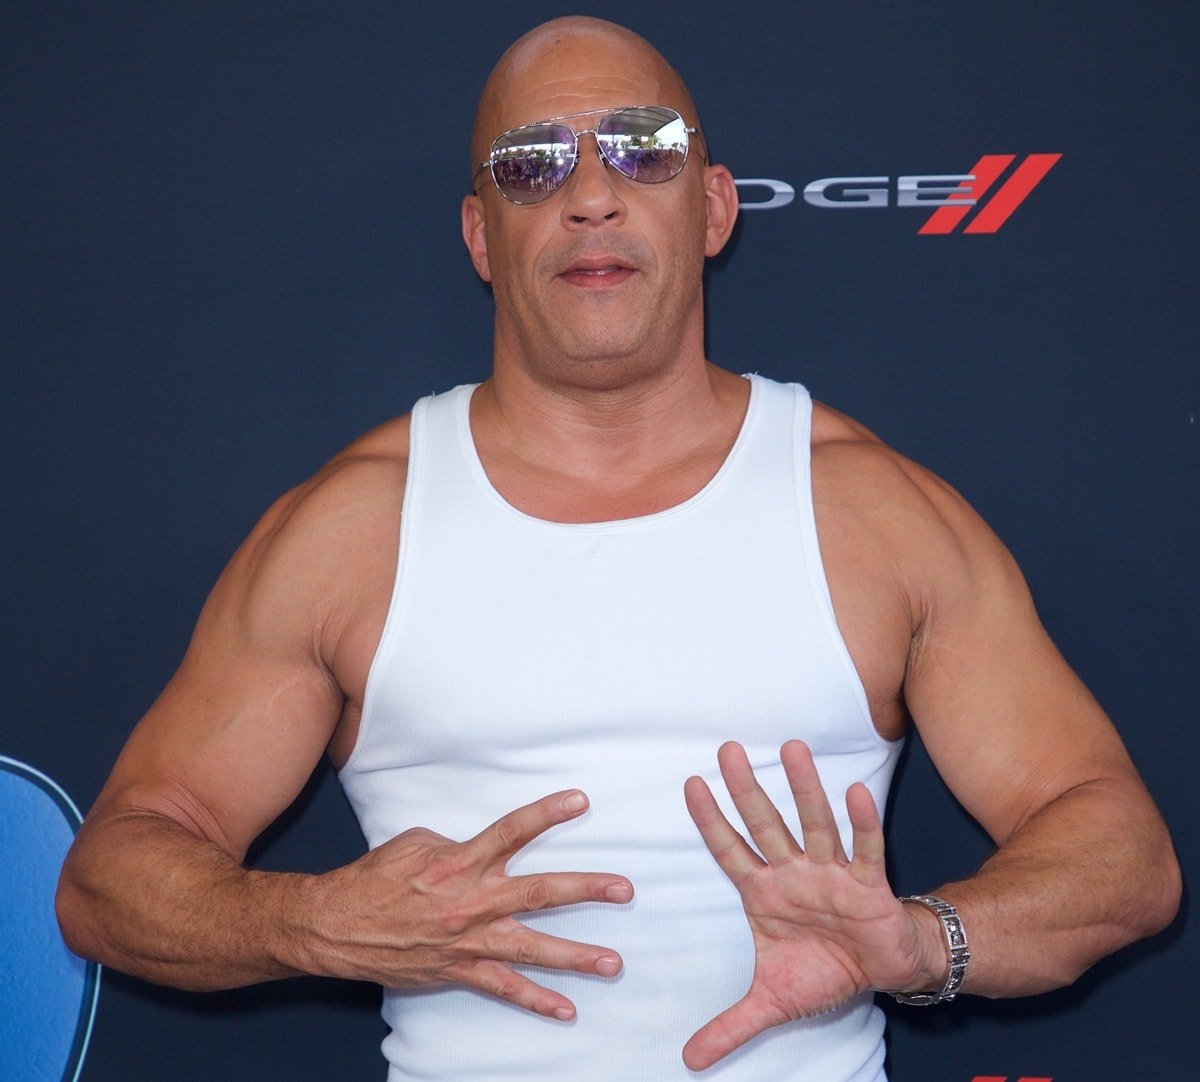 Vin Diesel wants to keep his personal life private and has slammed rumors he is gay